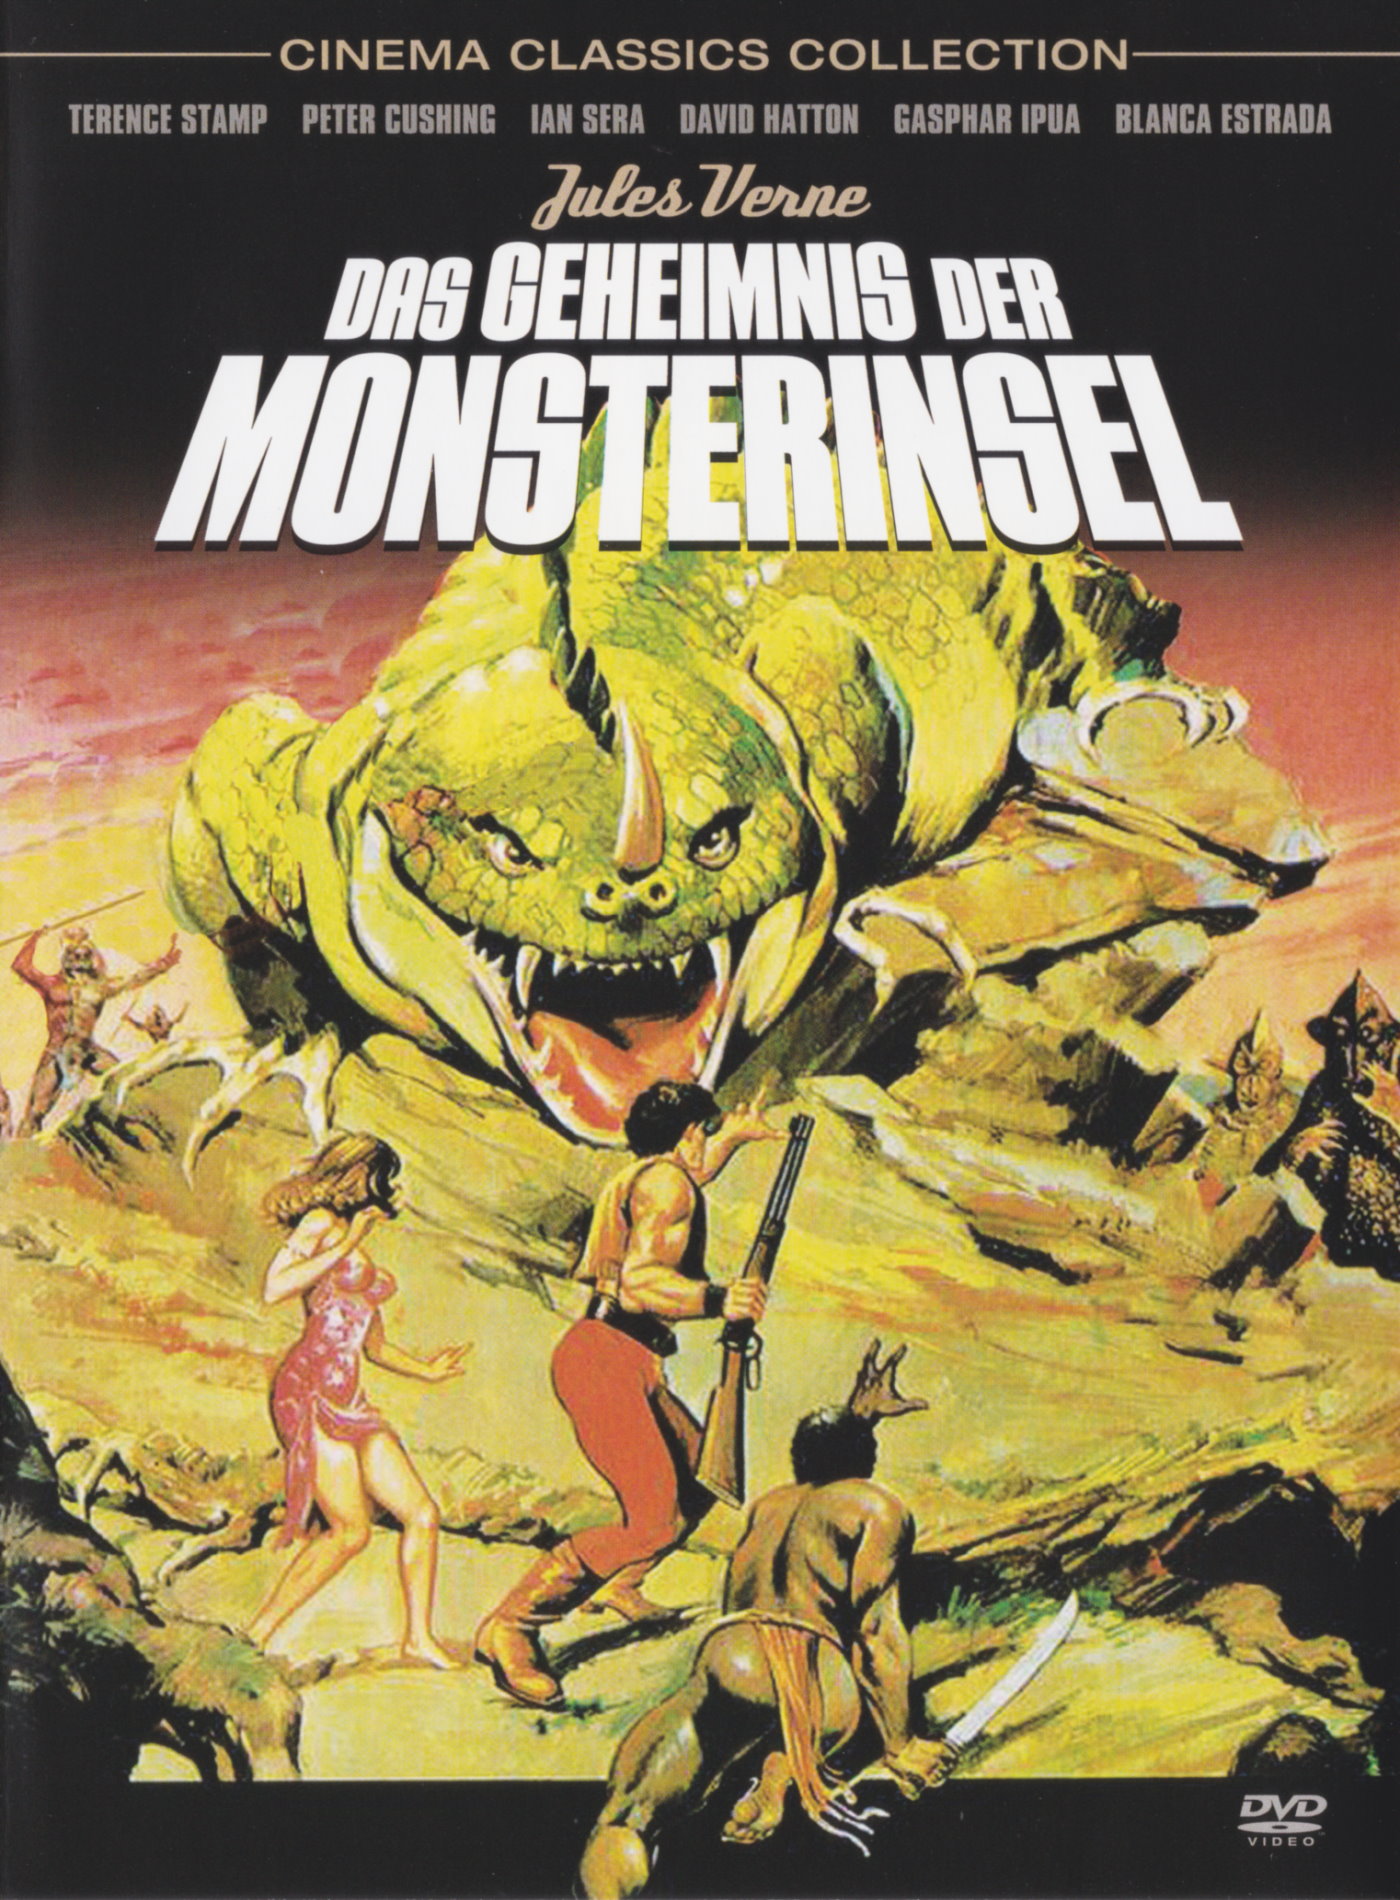 Cover - Das Geheimnis der Monsterinsel.jpg